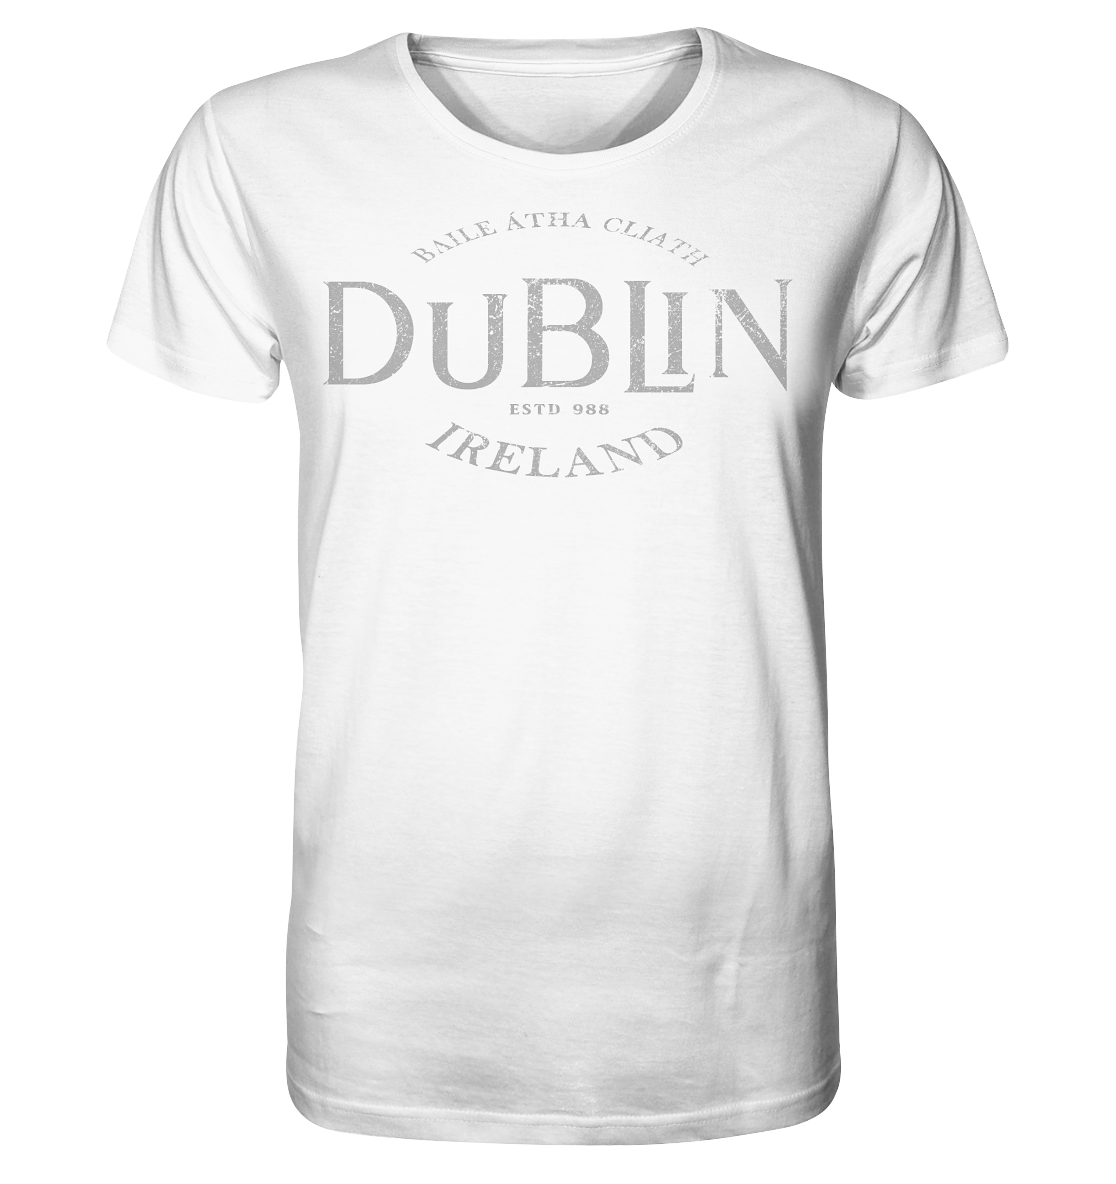 Dublin "Ireland / Baile Átha Cliath / Estd 988" - Organic Shirt